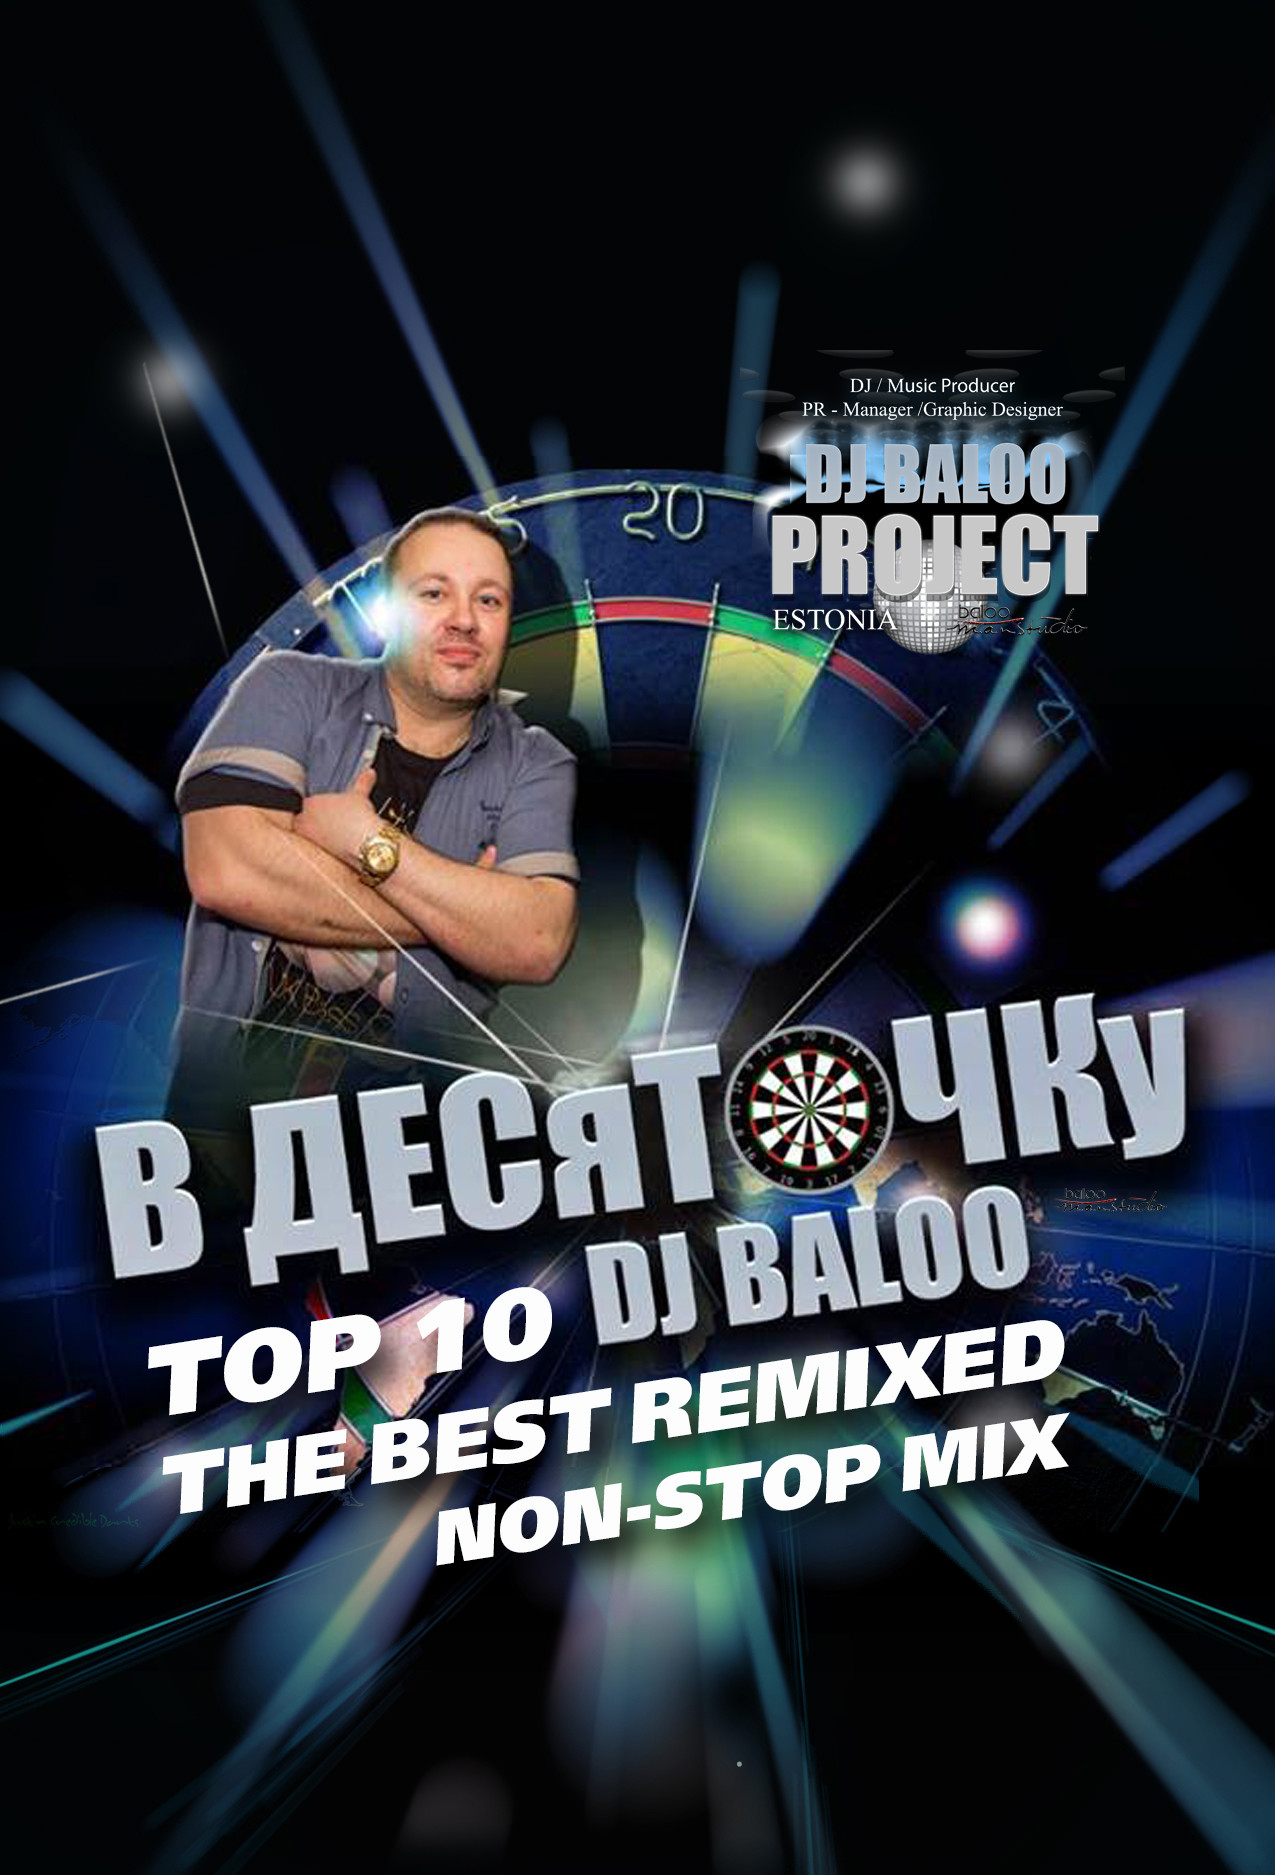 В ДЕСЯТОЧКУ@DJ BALOO TOP10 BEST EXTENDED REMIXED NON-STOP MIX (vol.1) – DJ BALOO